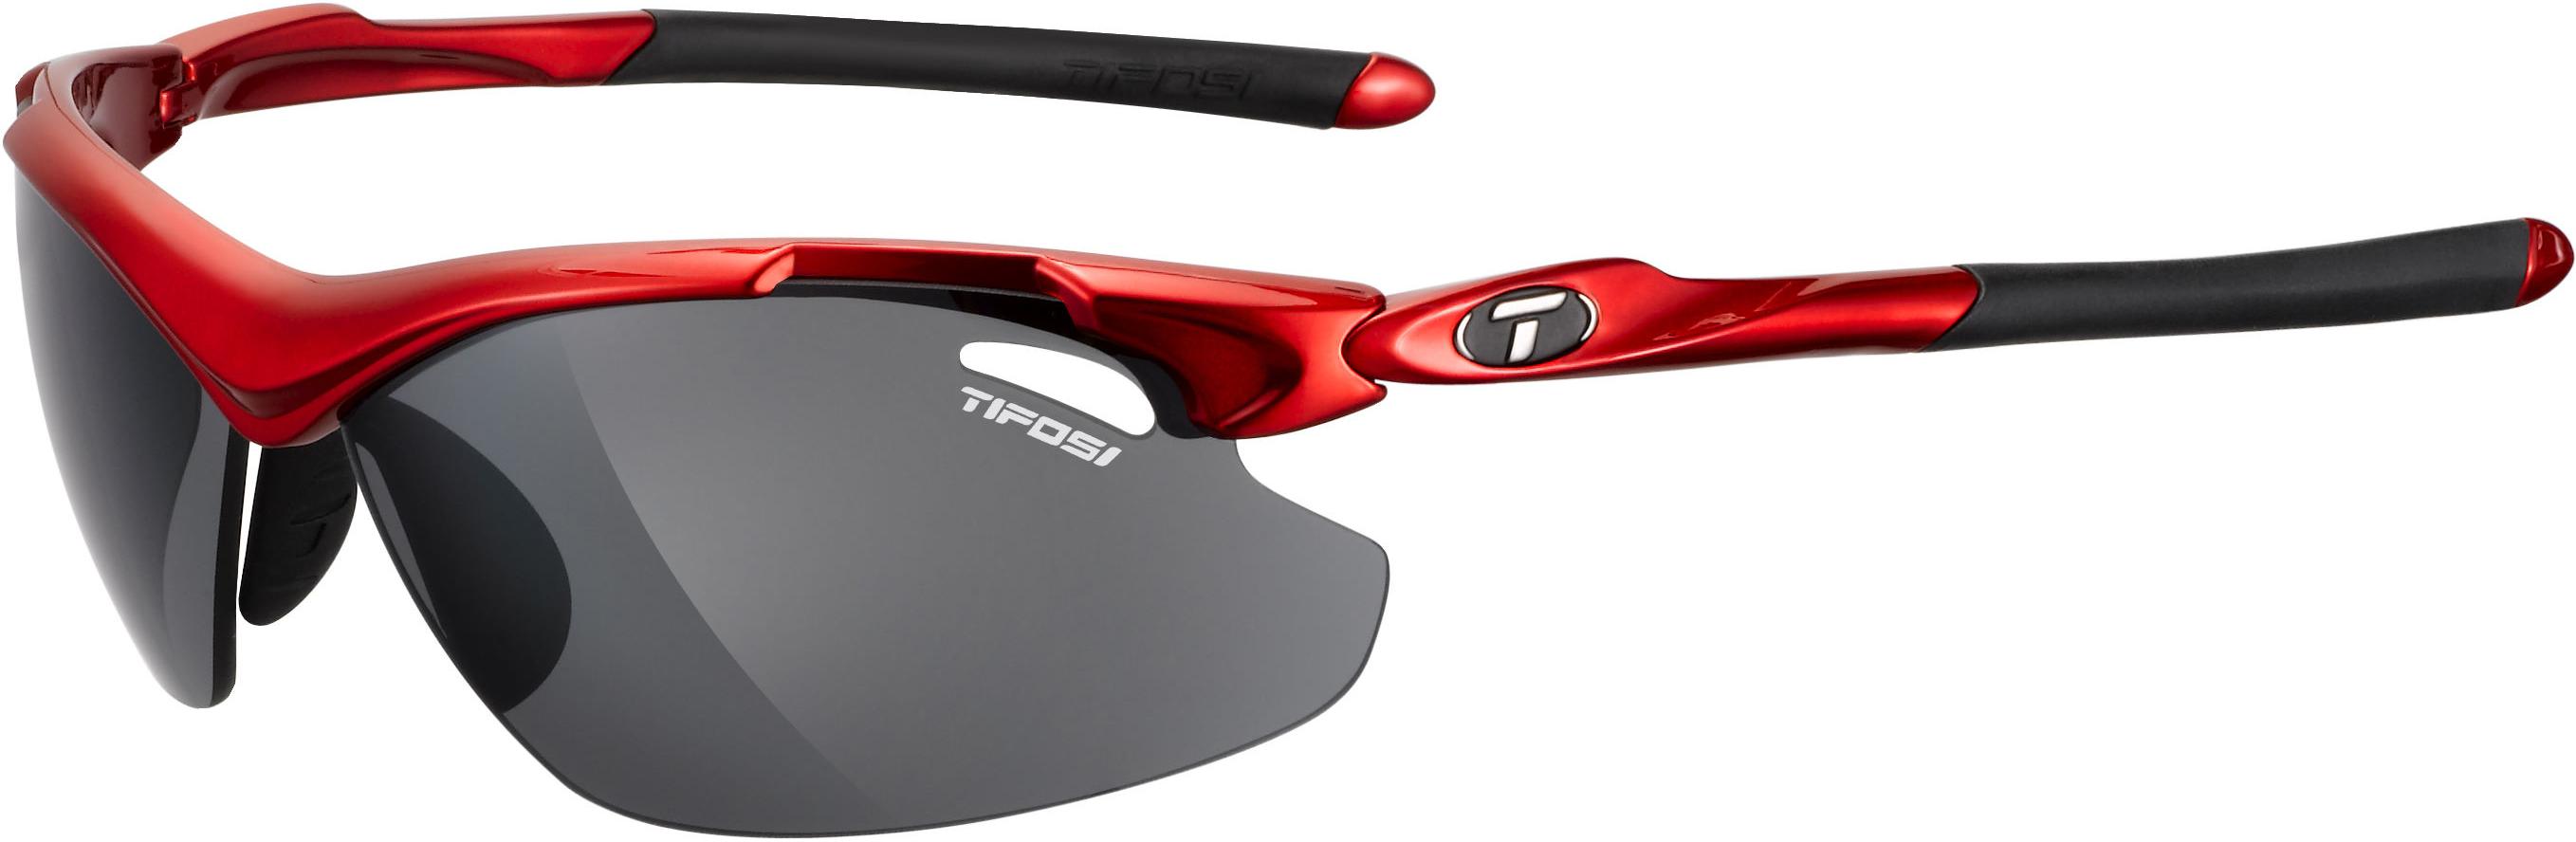 Tifosi Eyewear Tyrant 2.0 Sunglasses  Red